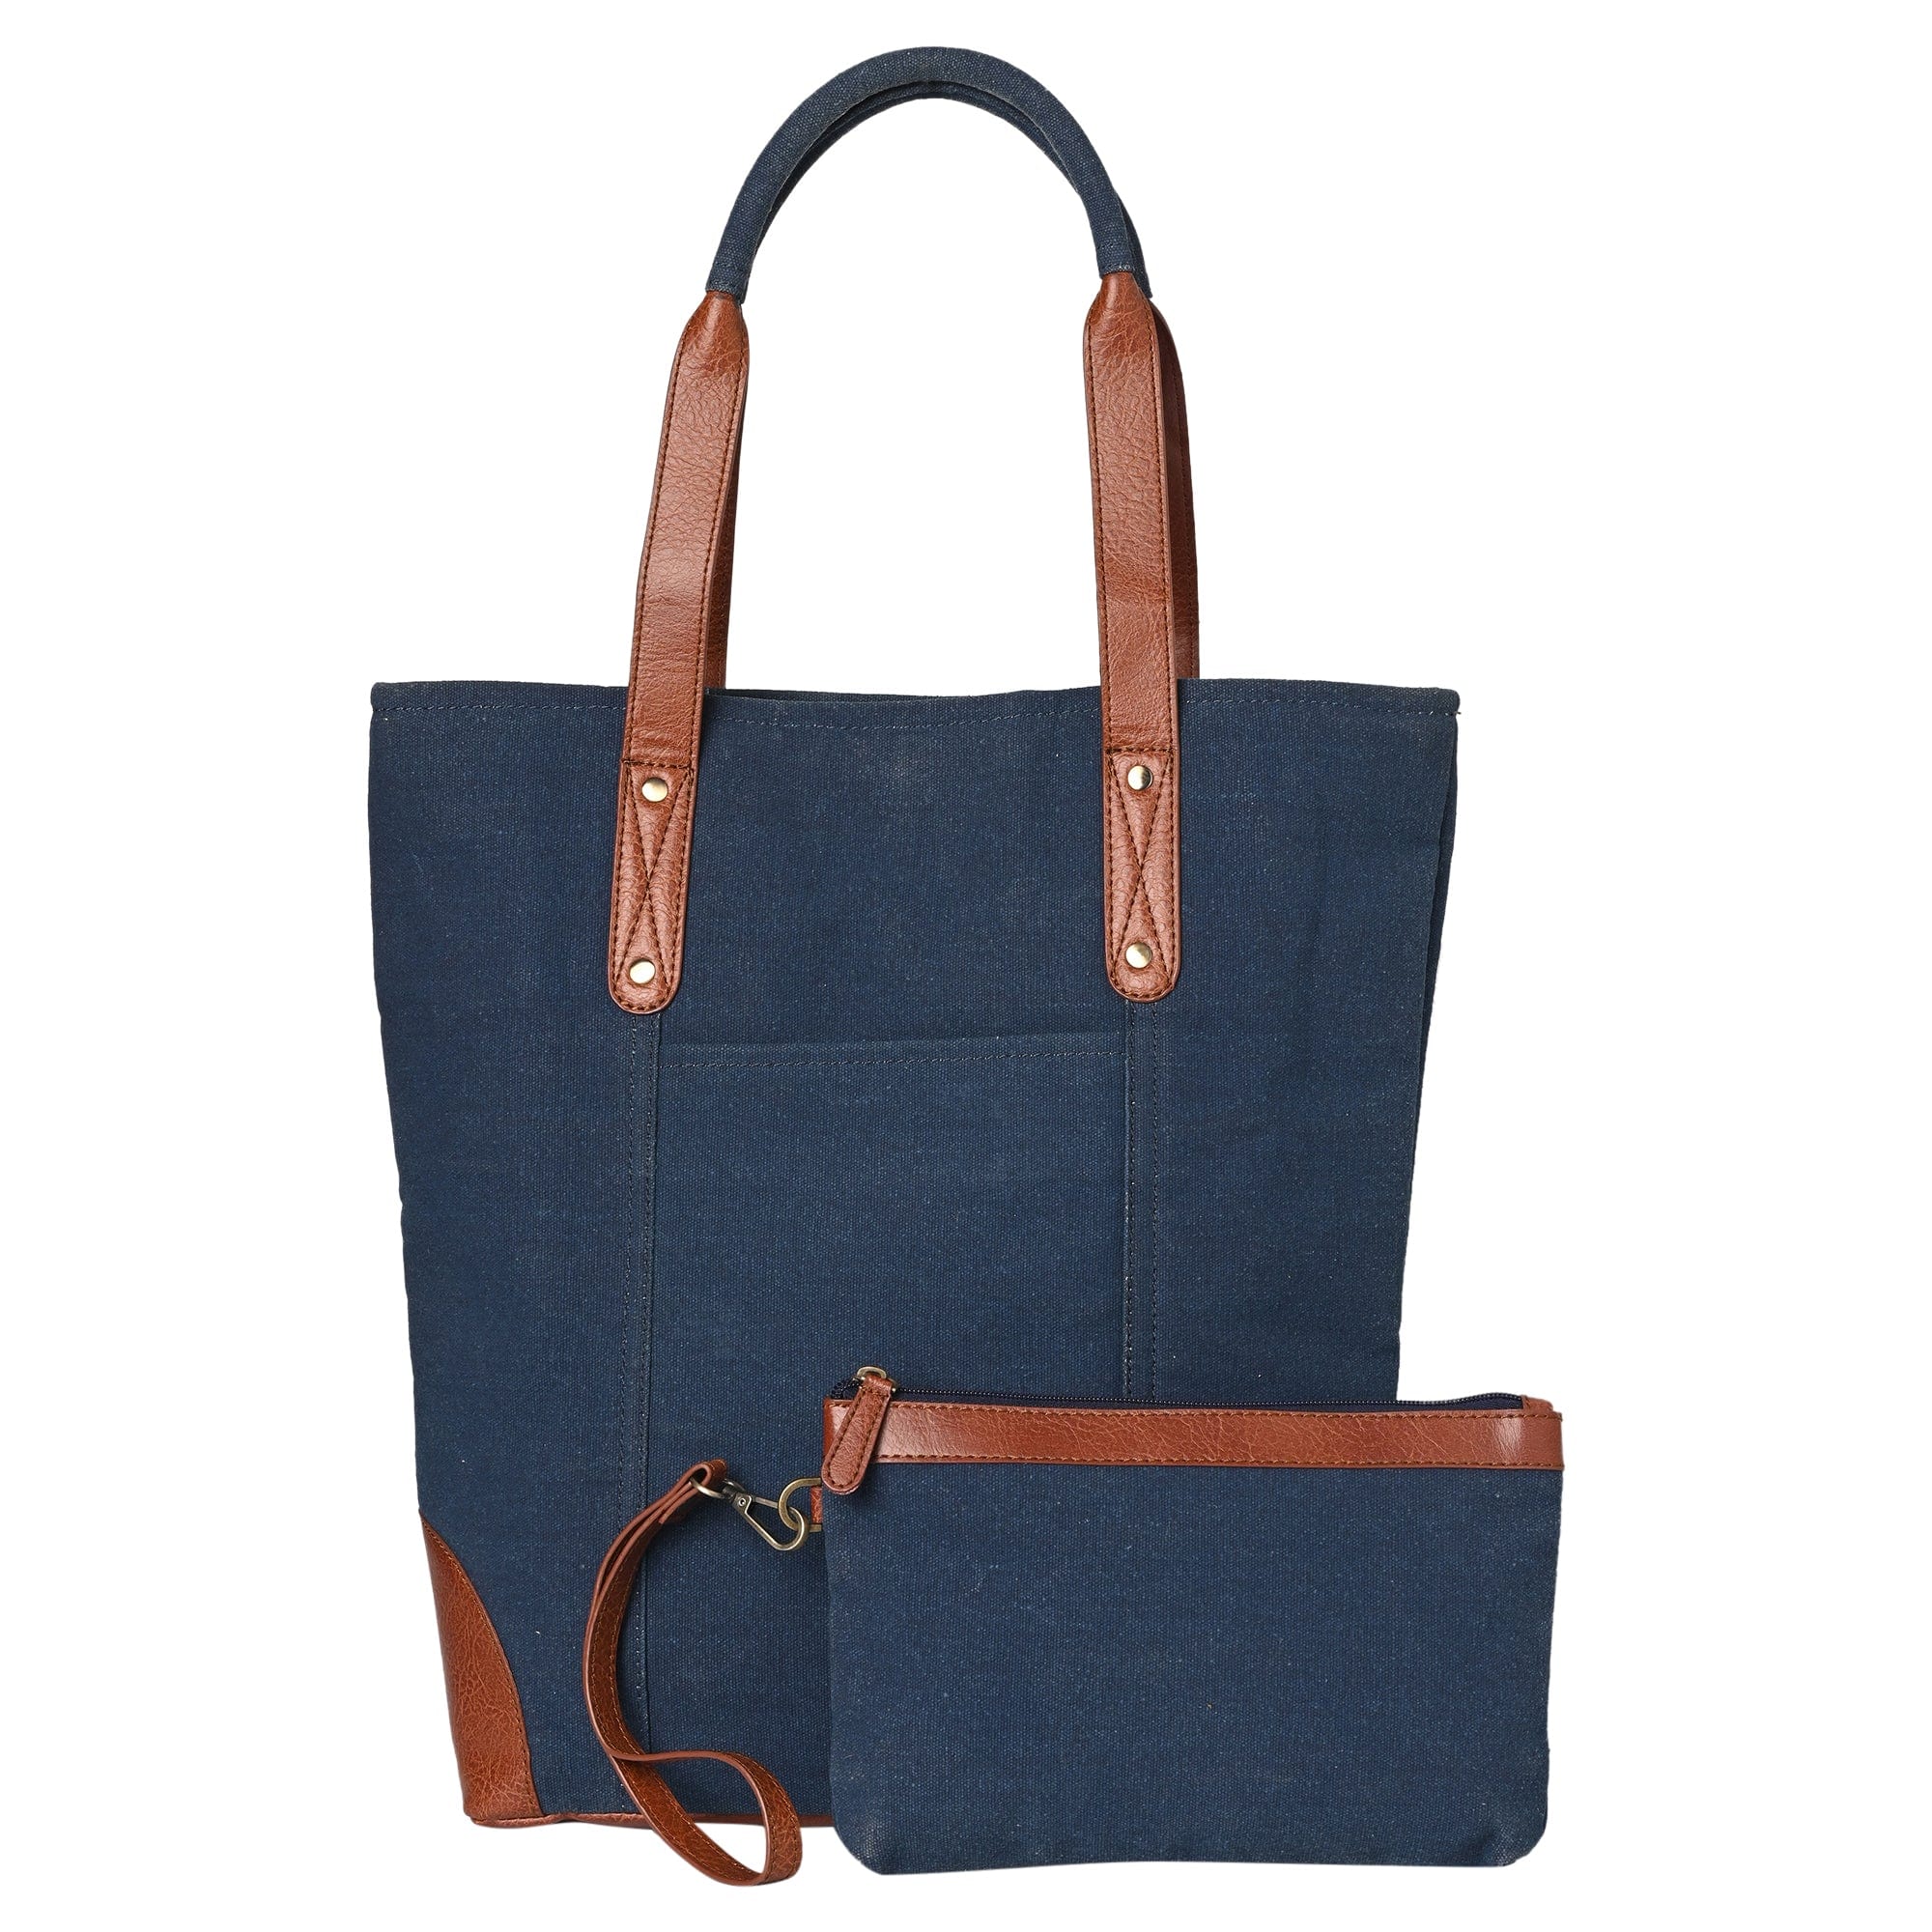 Should I Use My Tote Bag as a Purse? – Esin Akan